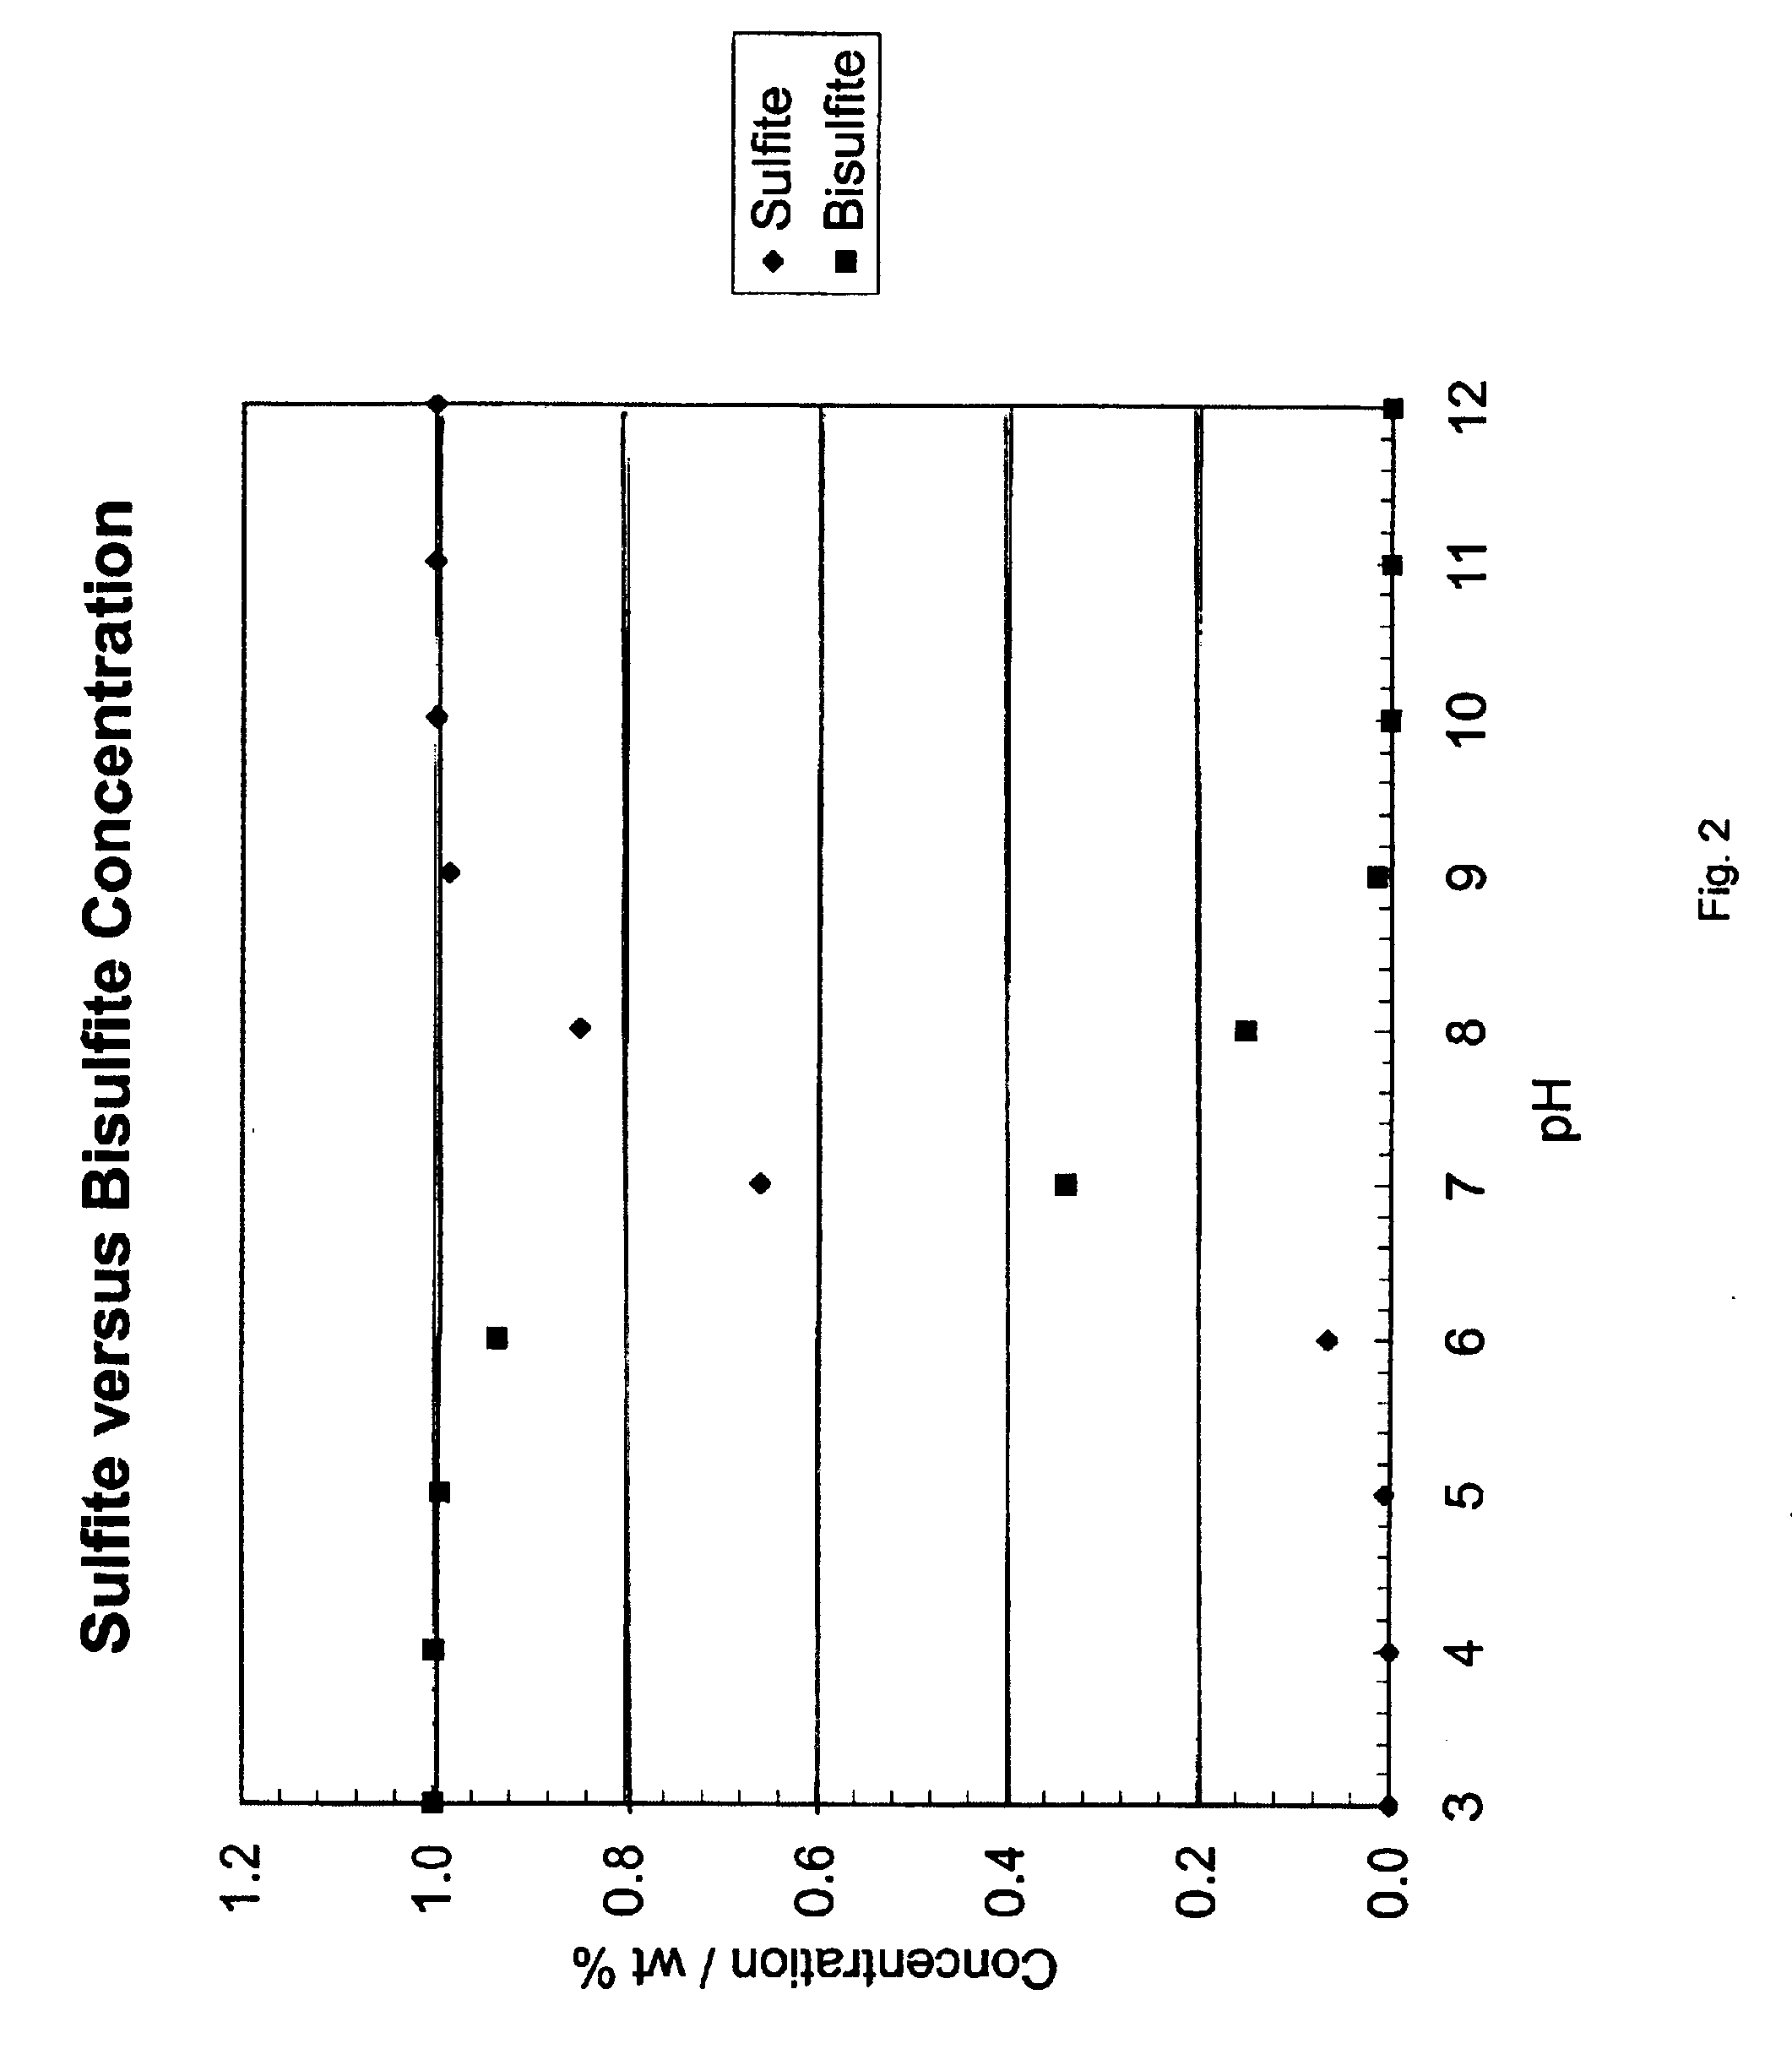 Sulfur dioxide removal using ammonia